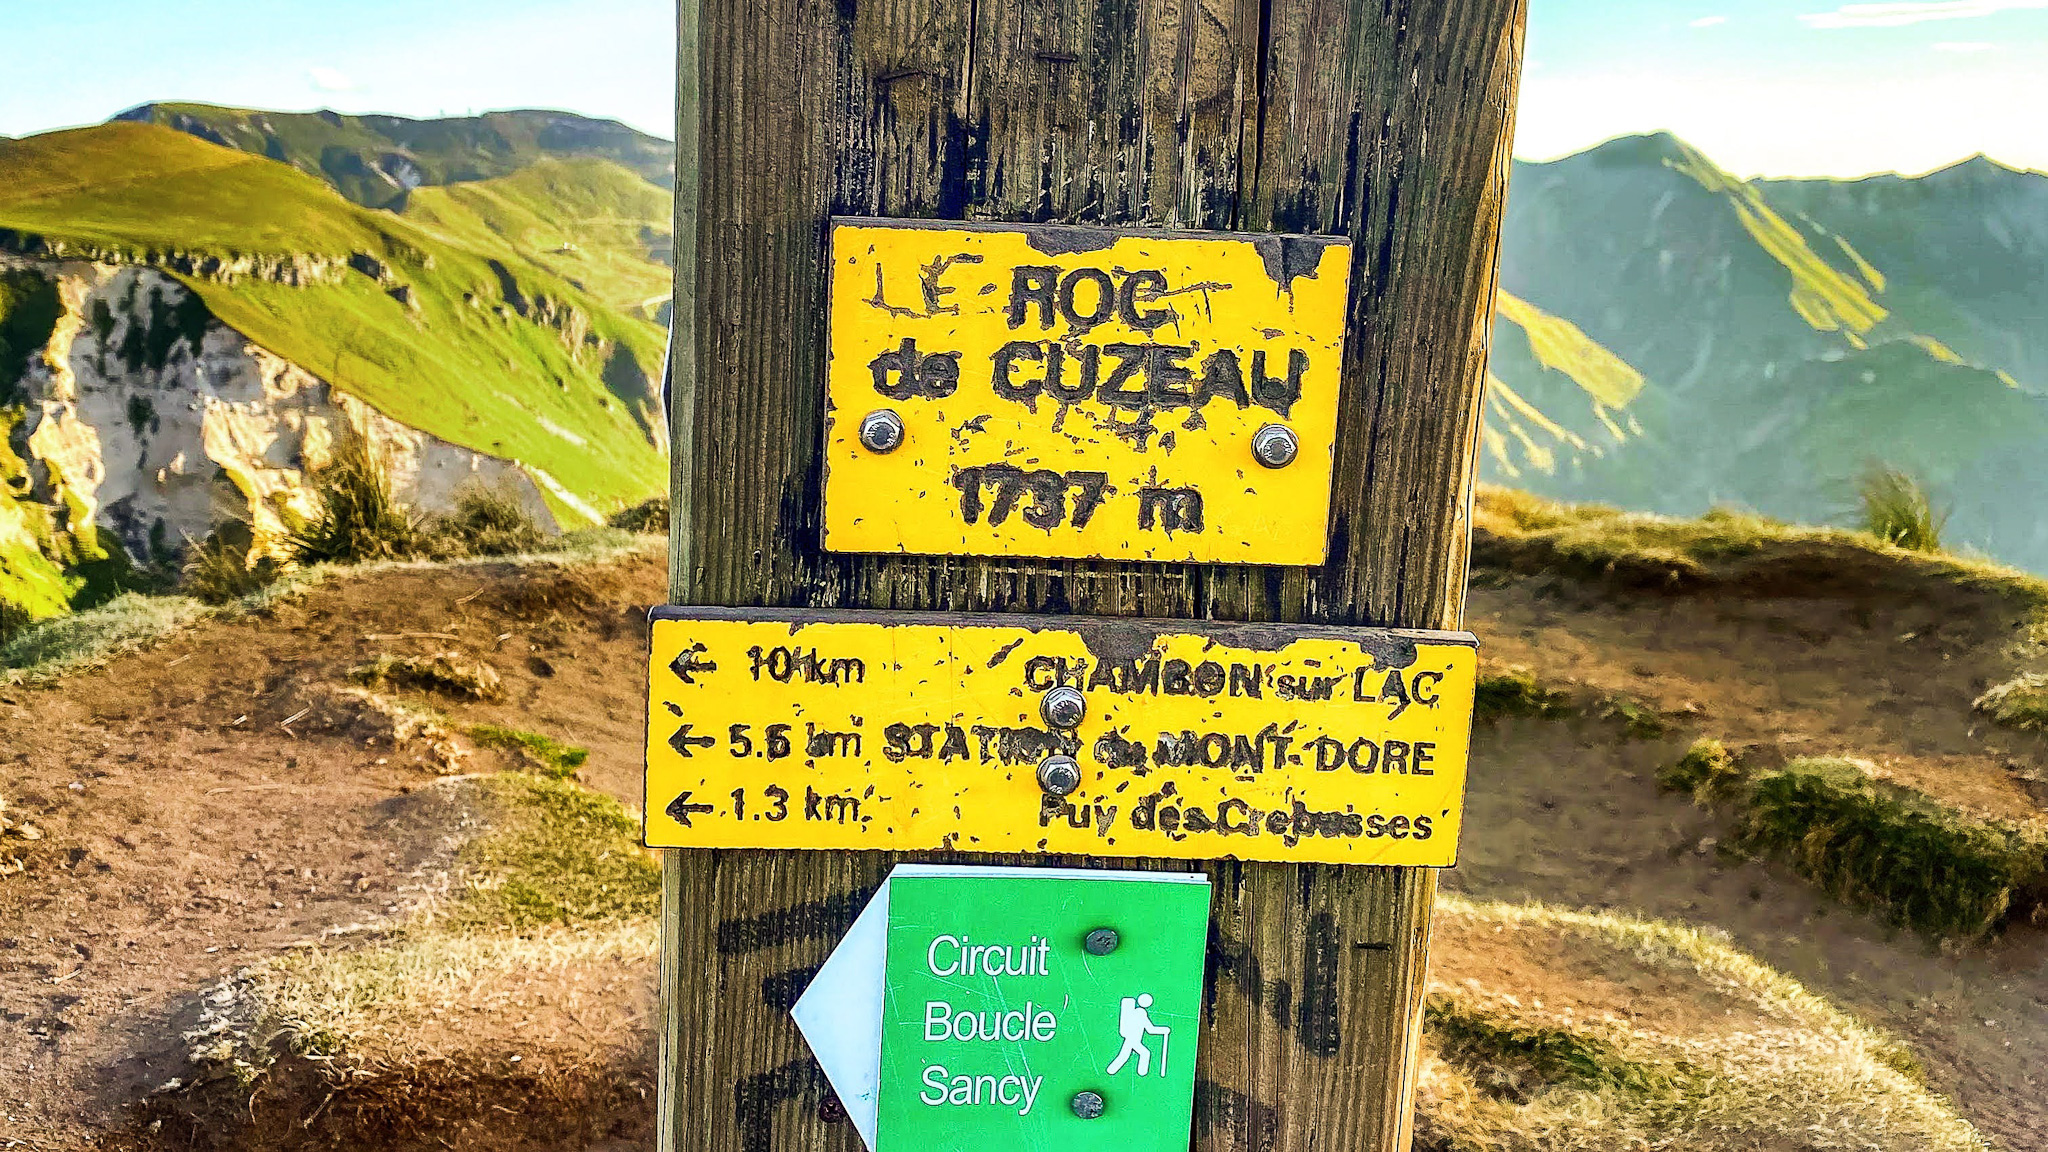 Roc de Cuzeau, summit at 1737 m